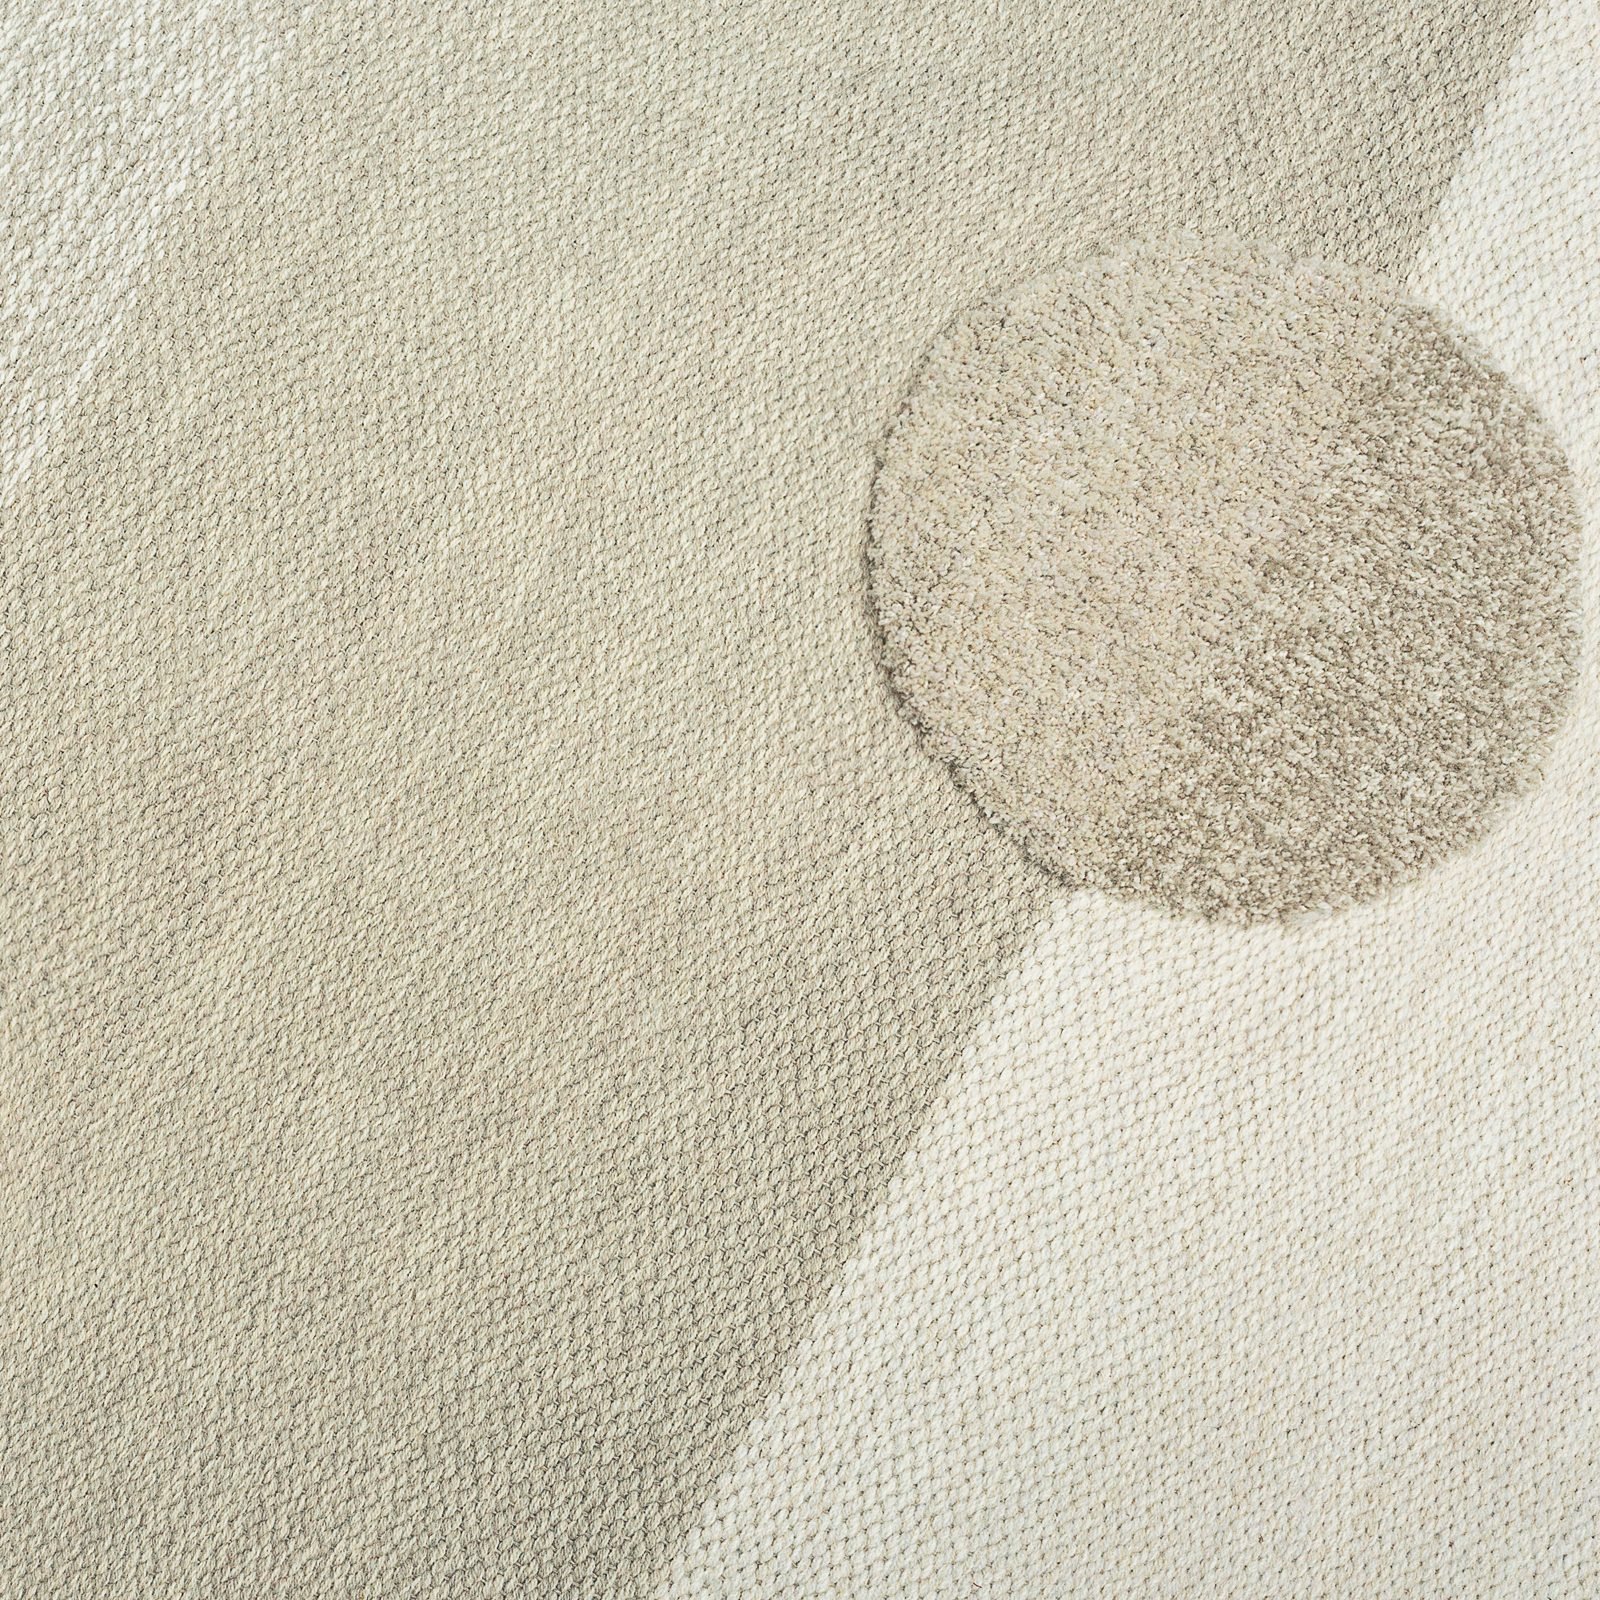 POMPOM Large created by Eva Schildt, white and beige (12).JPG